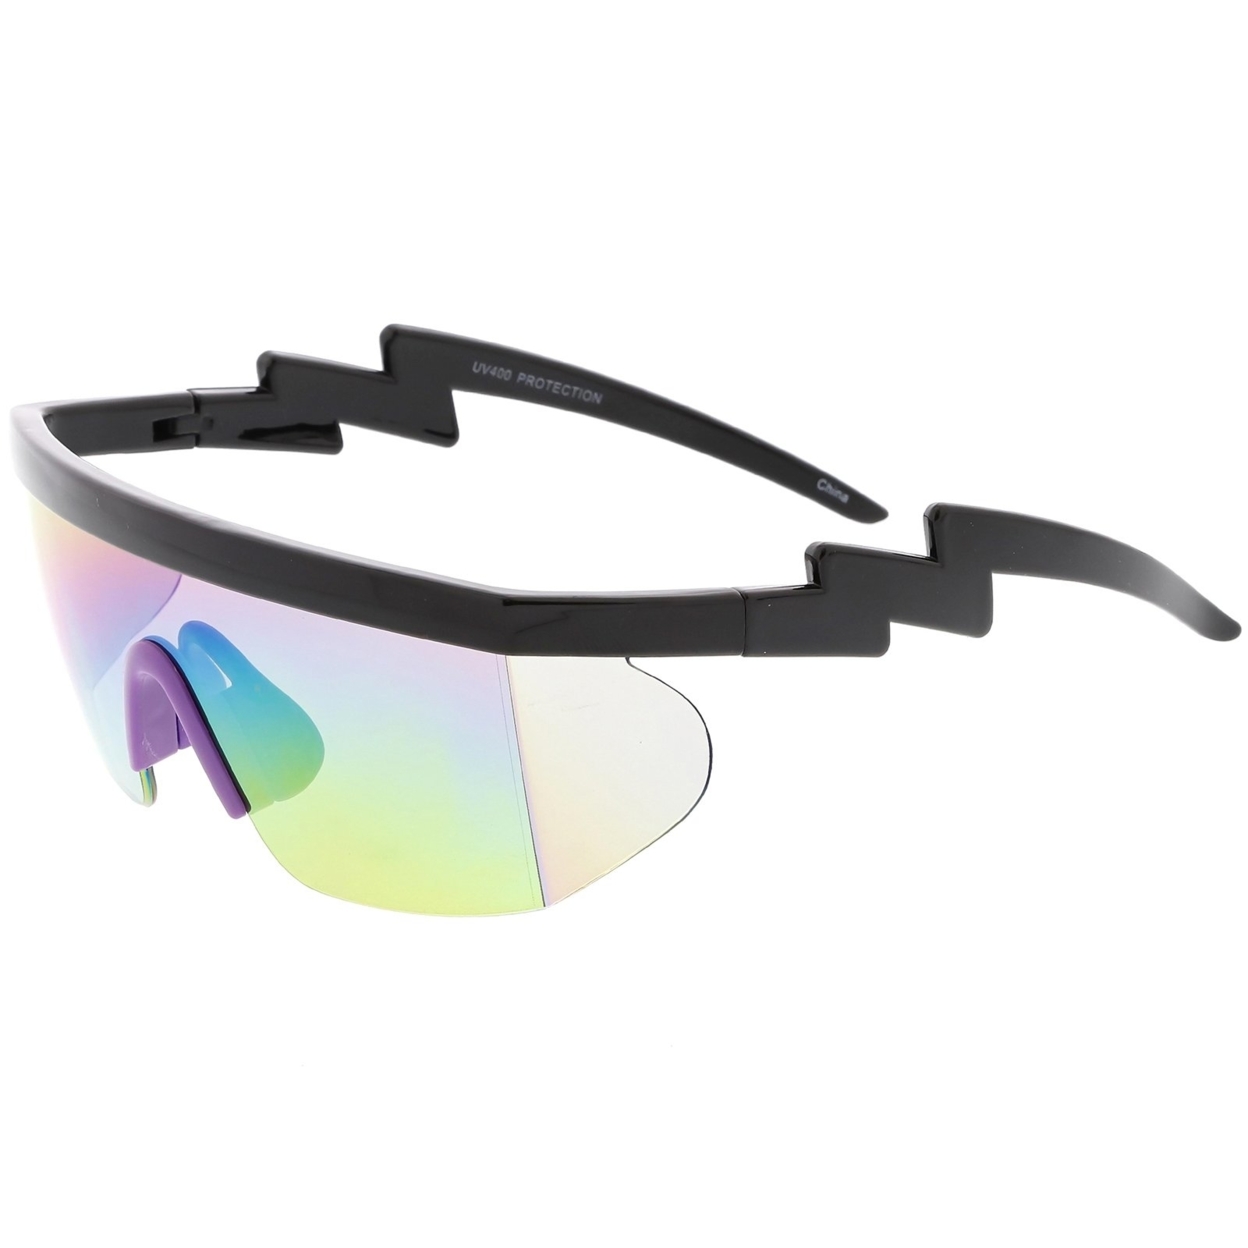 Oversize Semi Rimless Goggle Shield Sunglasses Mirrored Lens 60mm - White Yellow / Rainbow